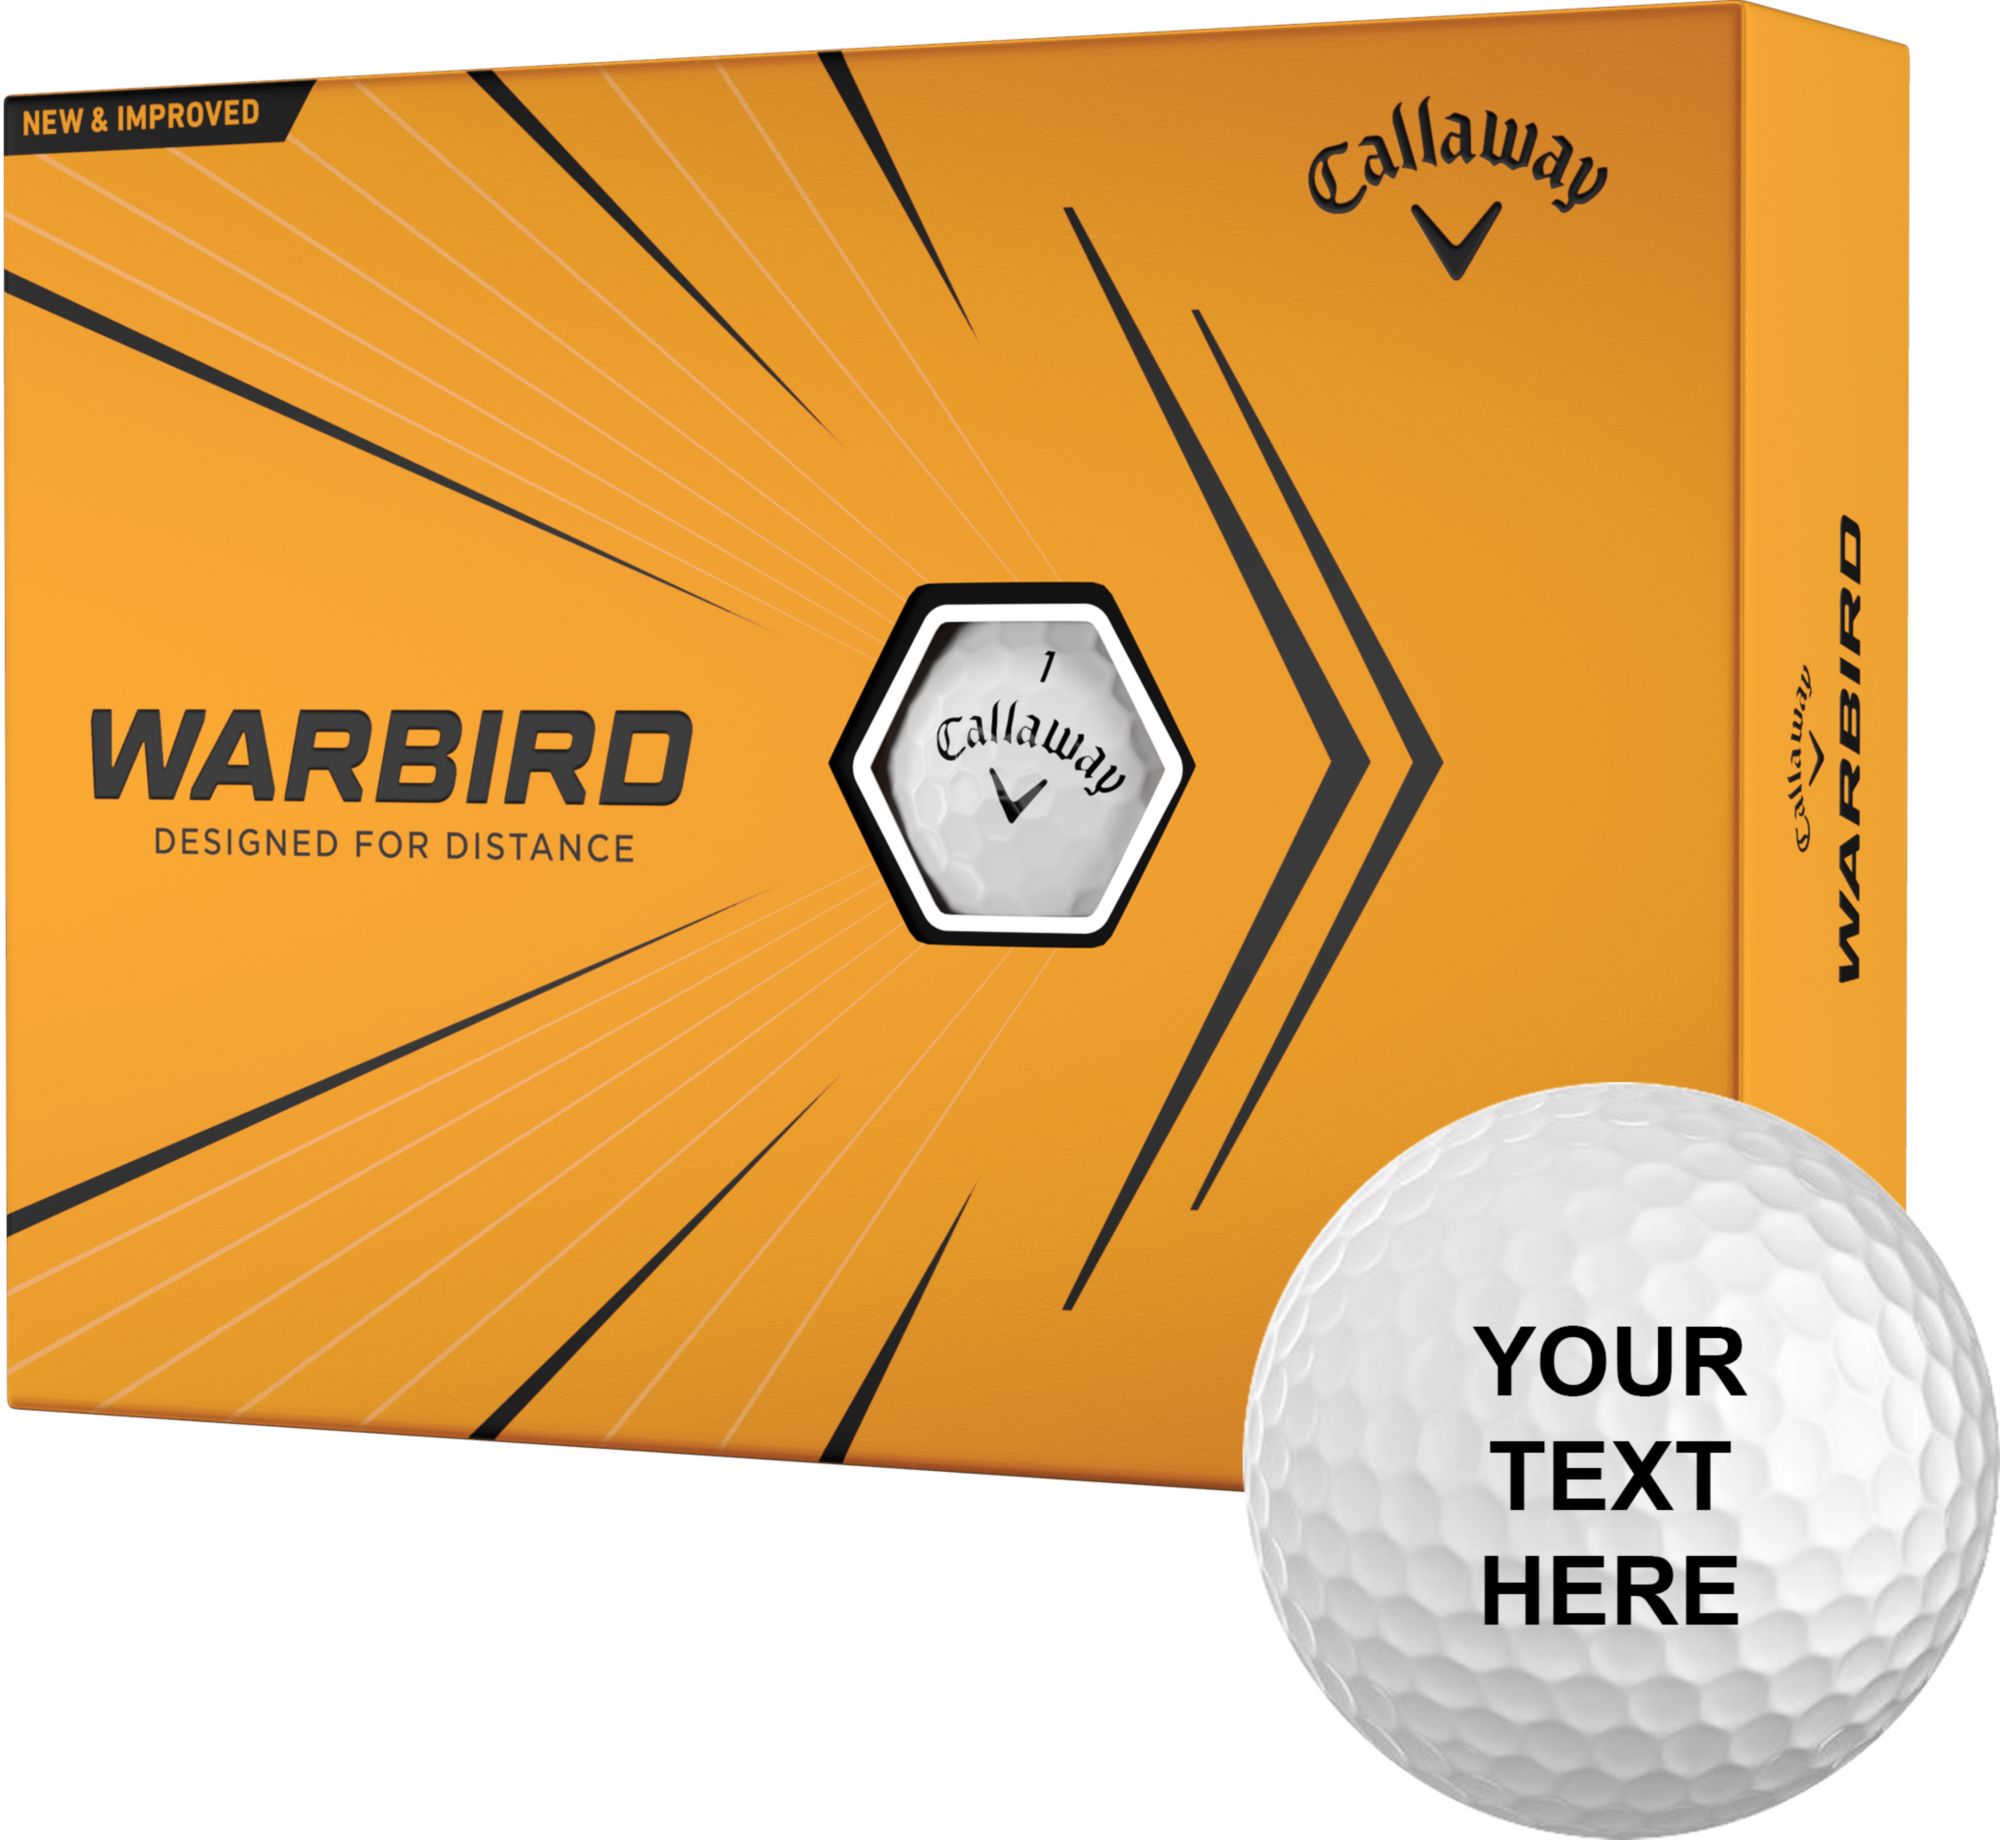 Callaway Warbird Personalized Golf Balls